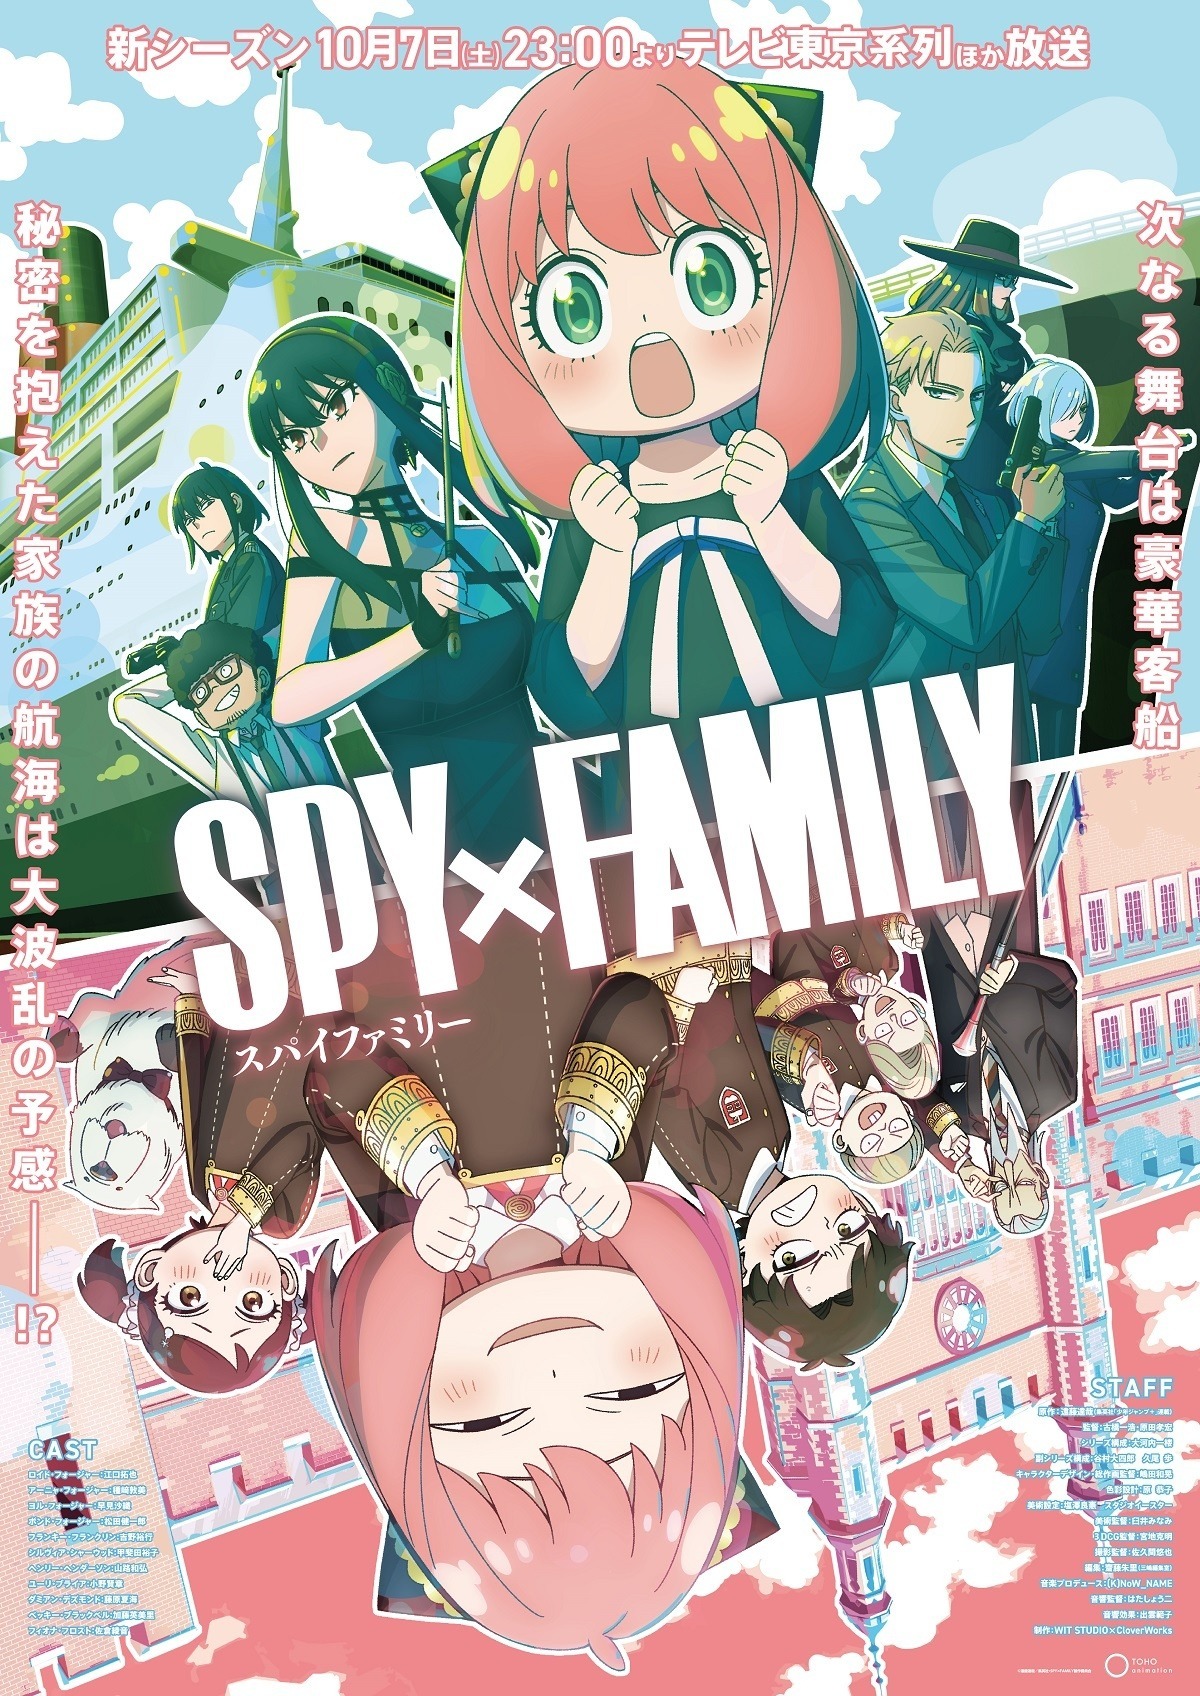 Spy x Family' Returns This October